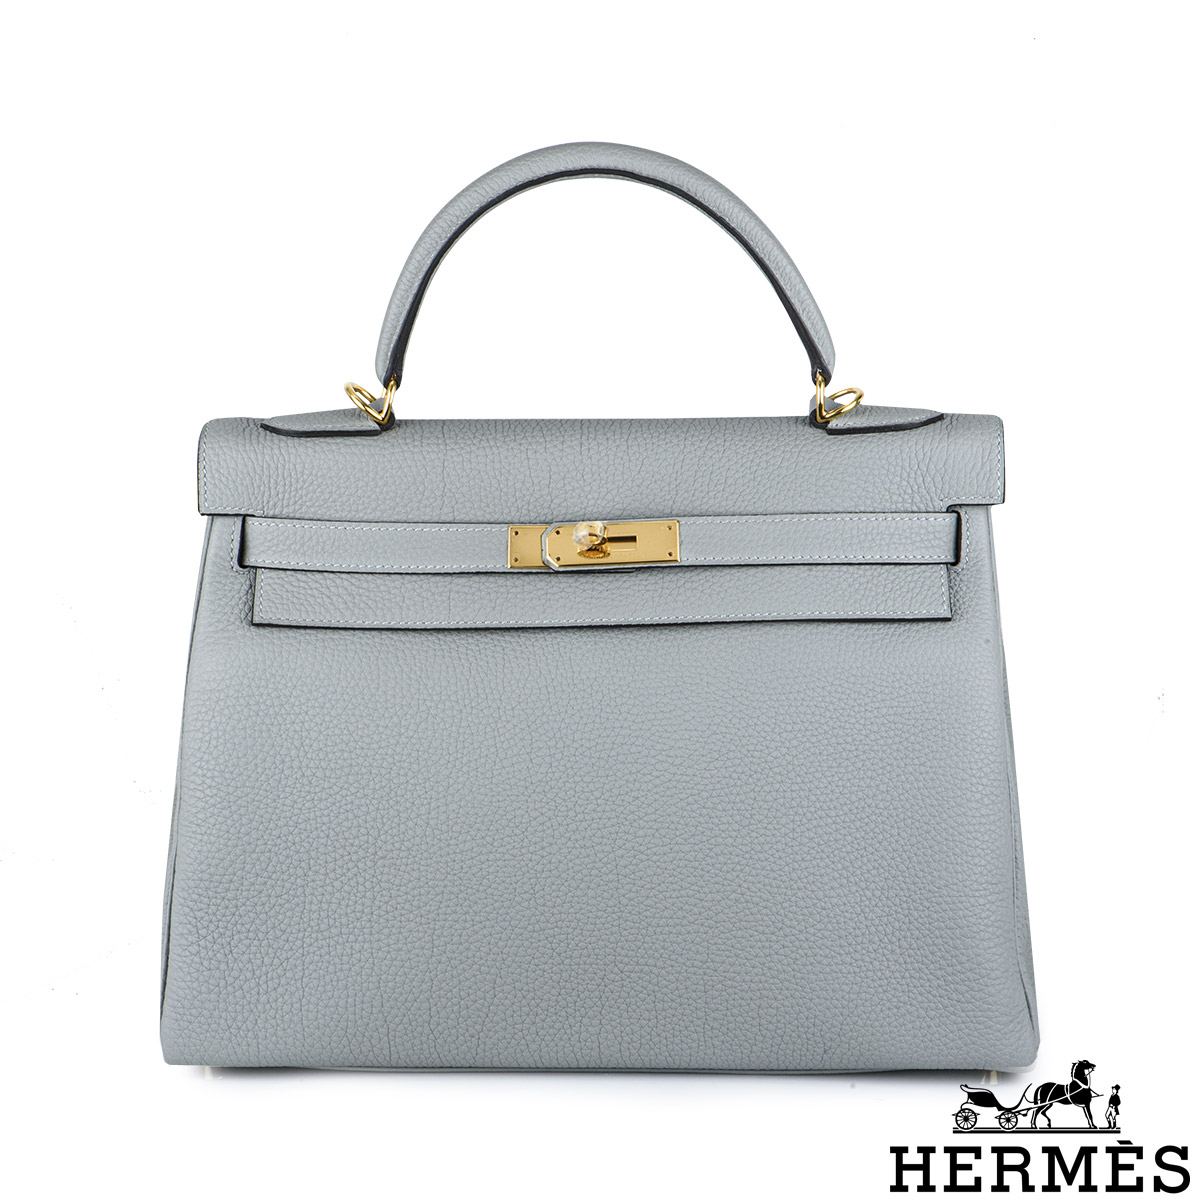 Hermes Kelly bag 25 Retourne Gris mouette Togo leather Silver hardware